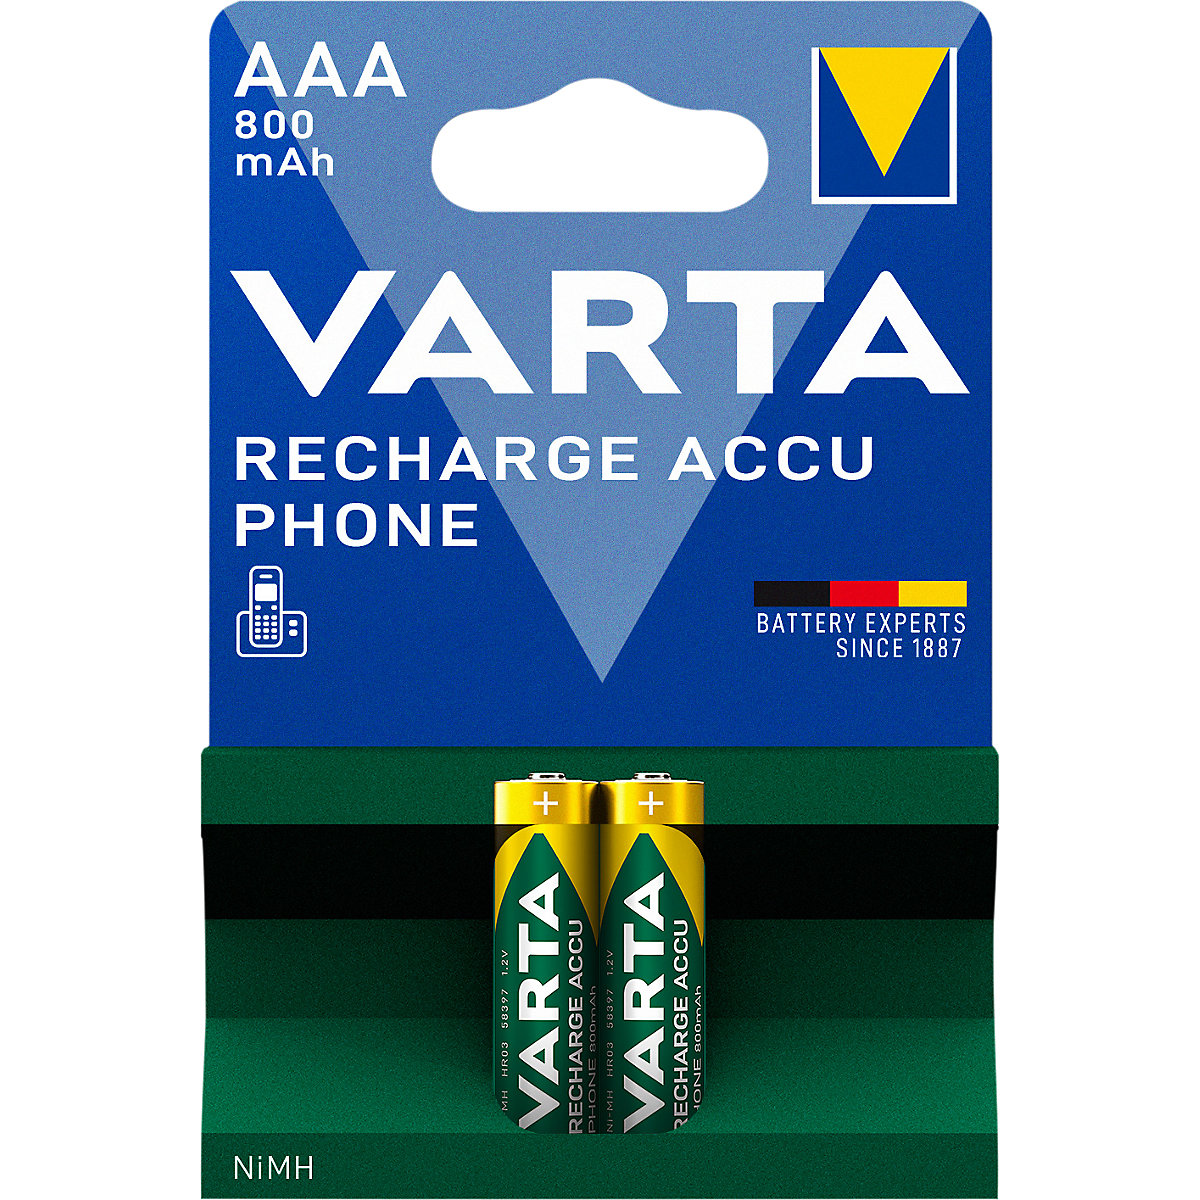 Phone battery, rechargeable – VARTA